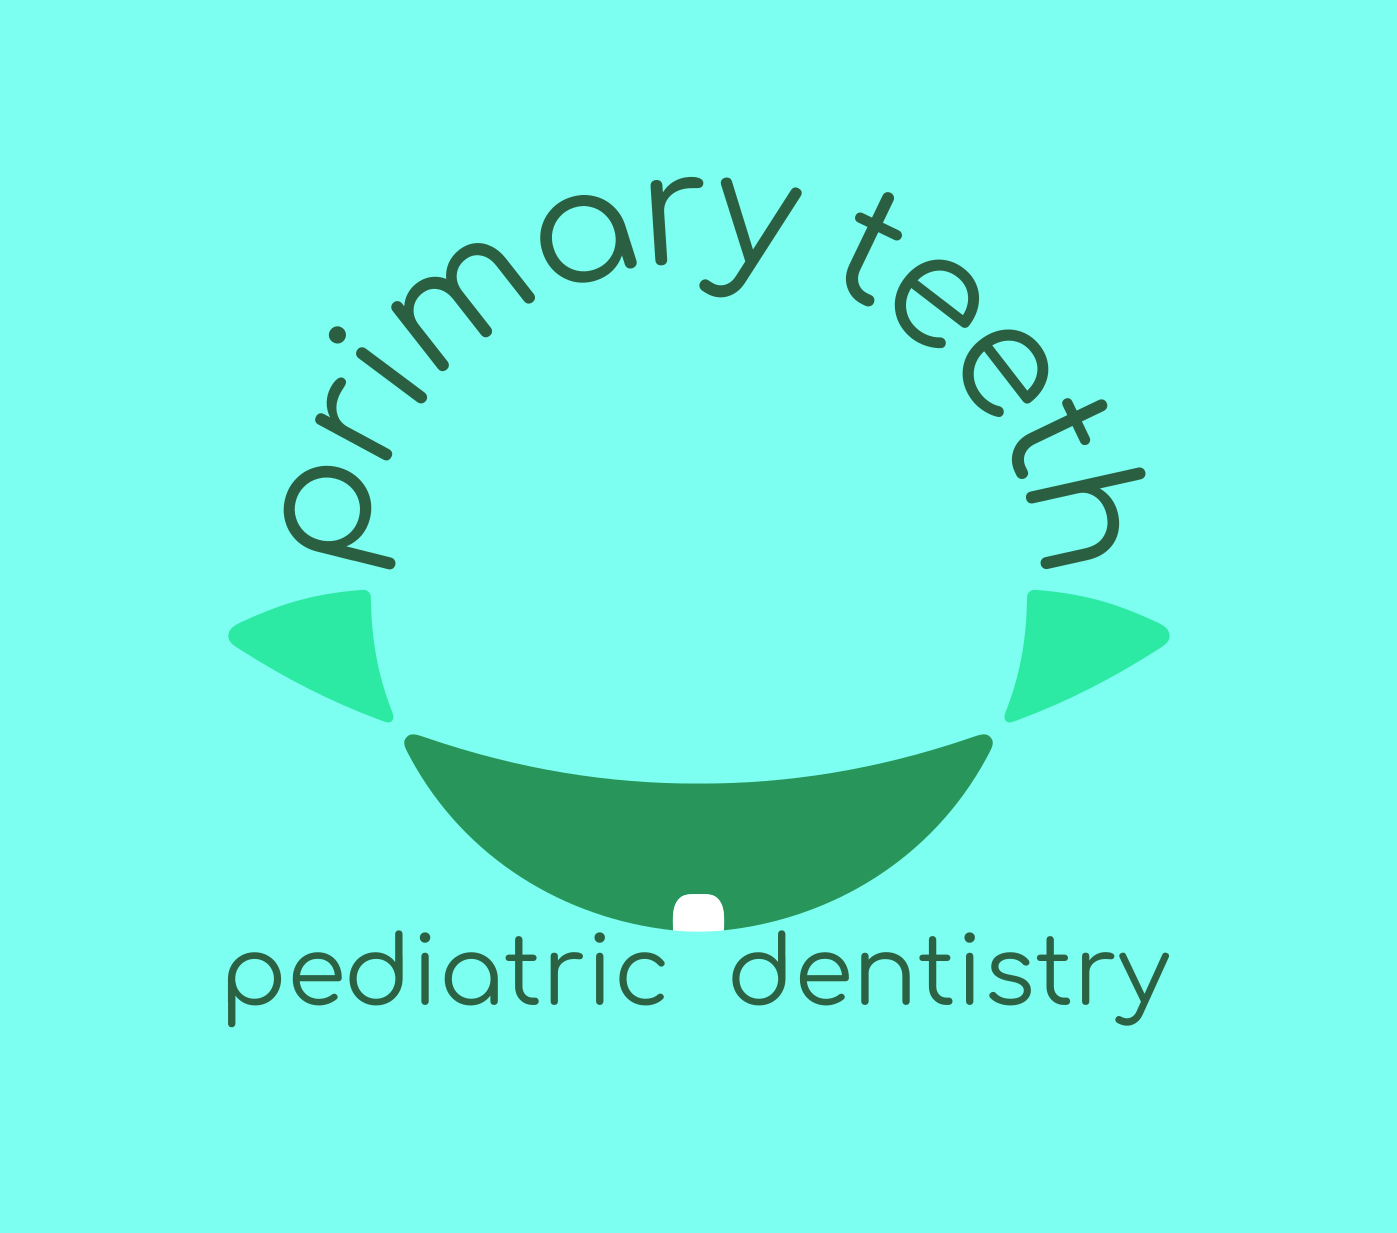 Primary Teeth Pediatric Dentistry logo